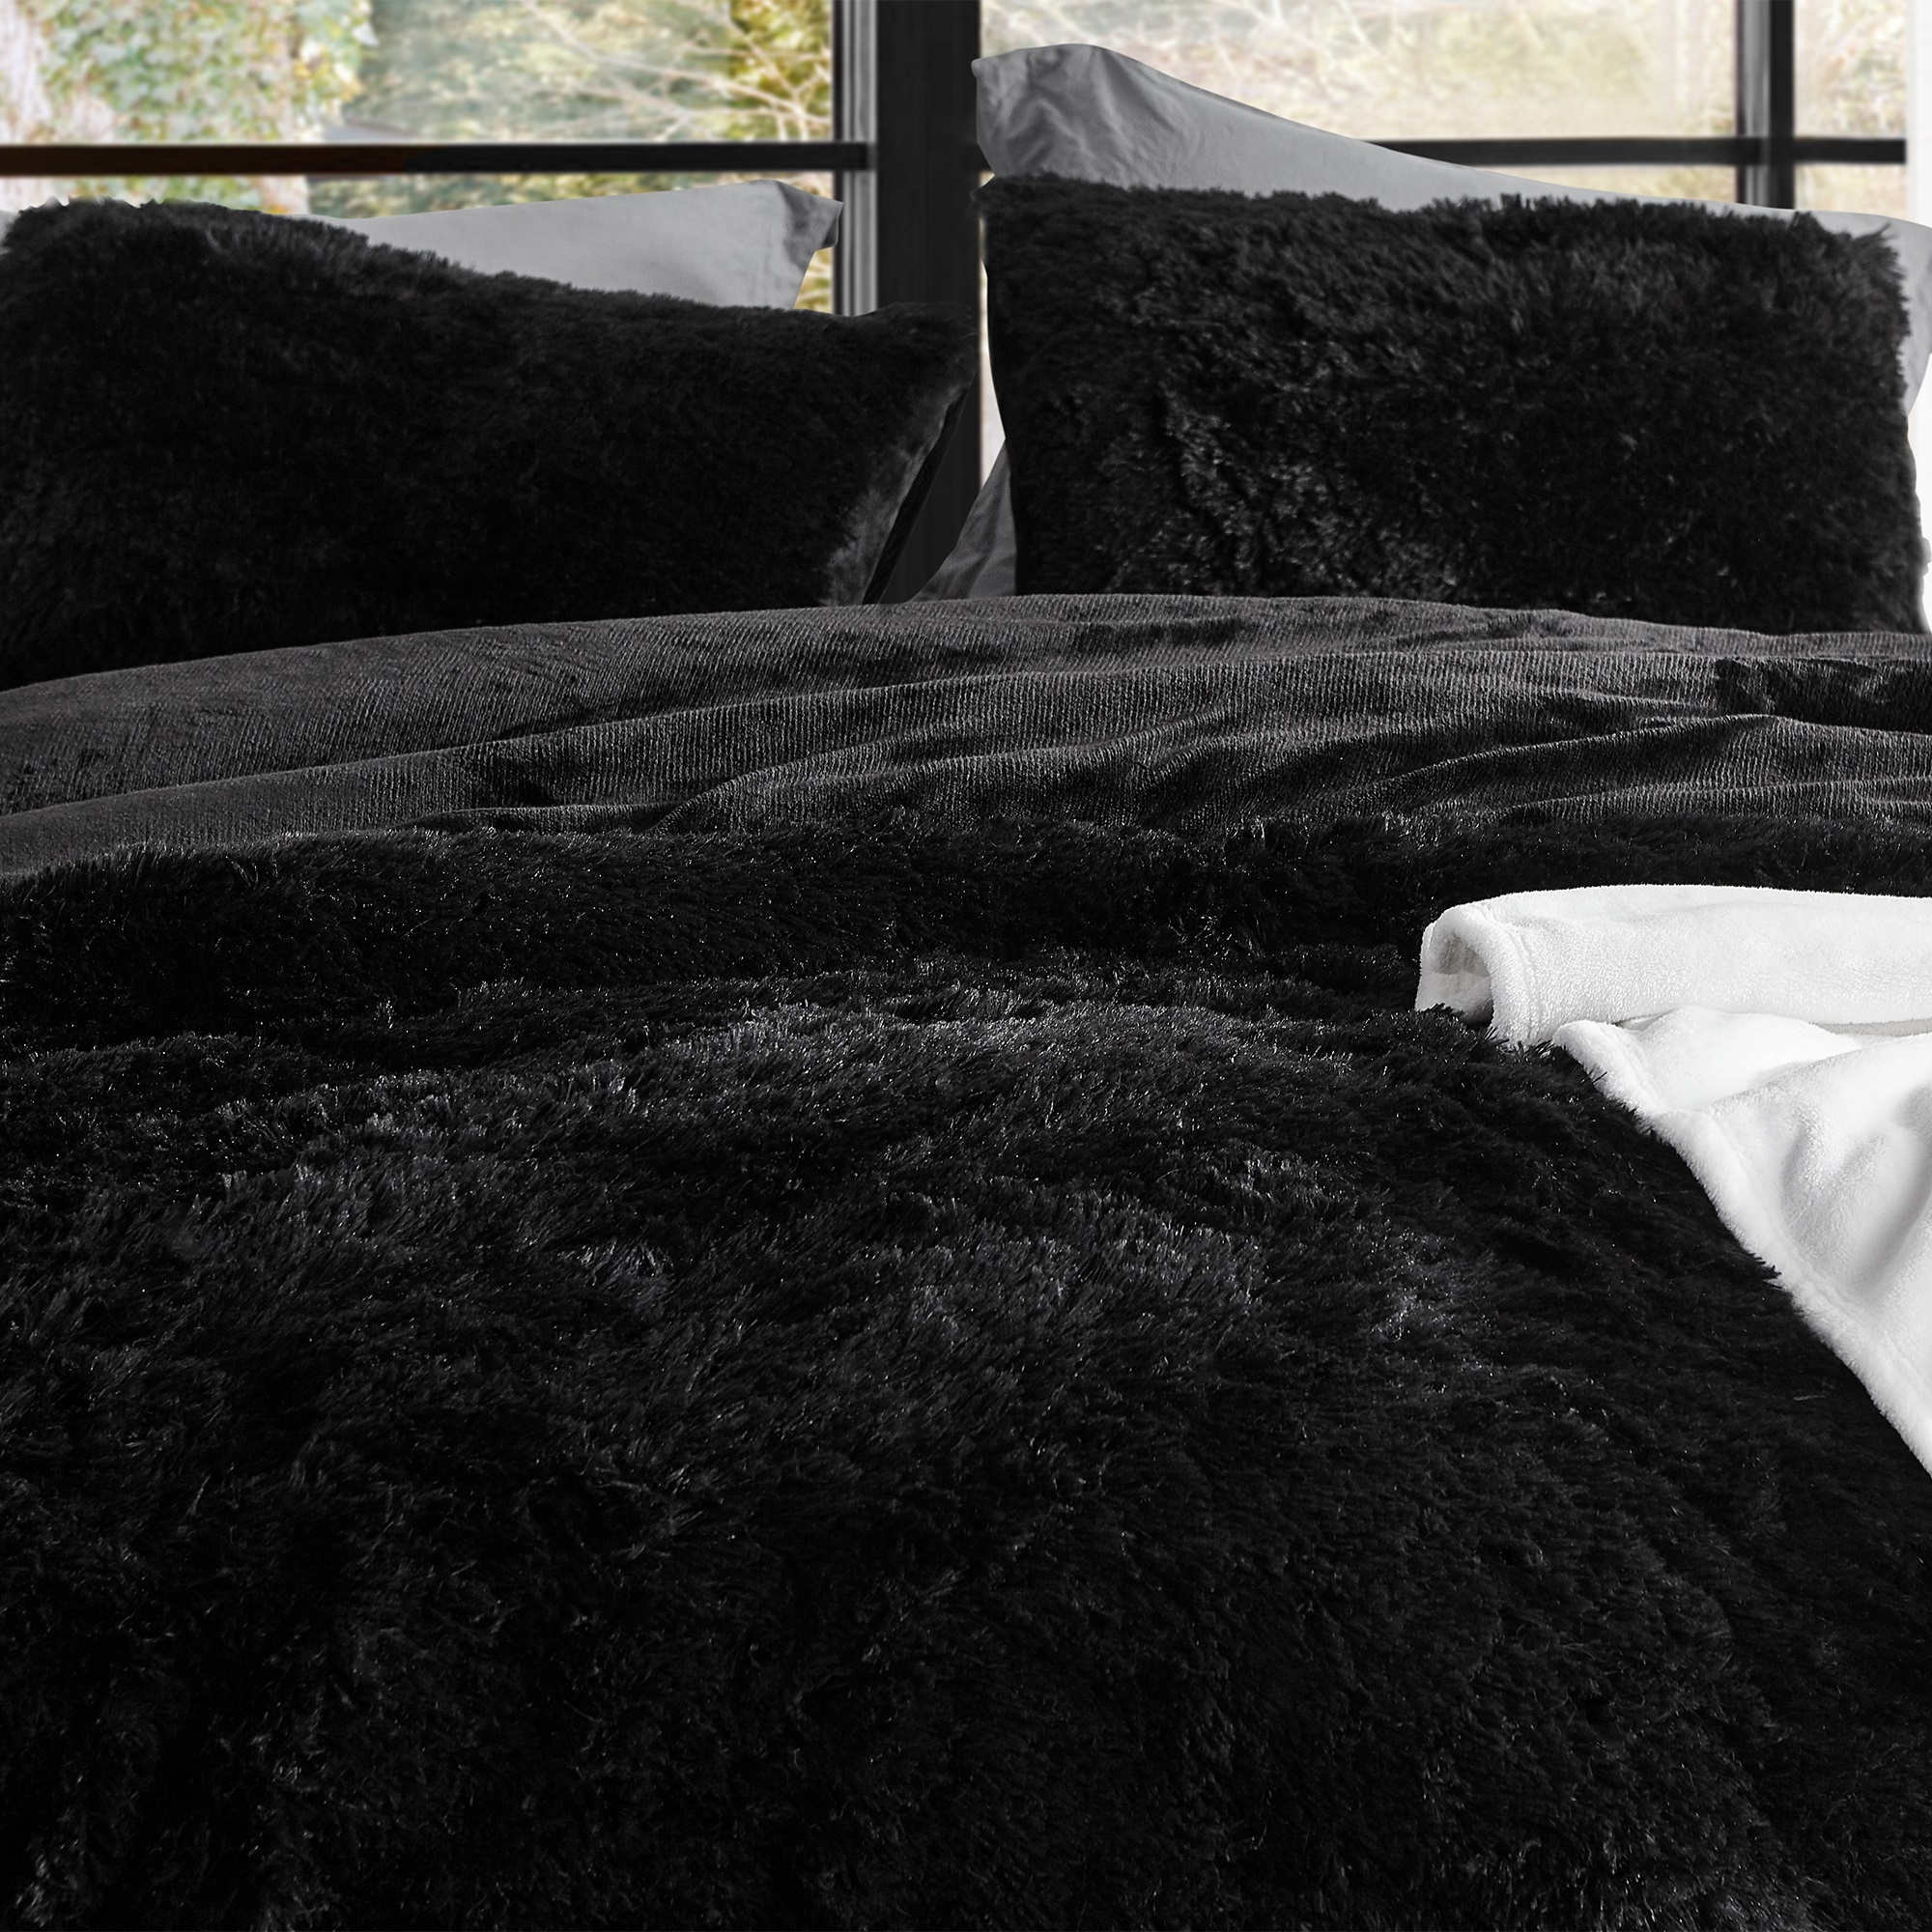 Coma Inducer® Oversized Comforter - Are You Kidding? - Black